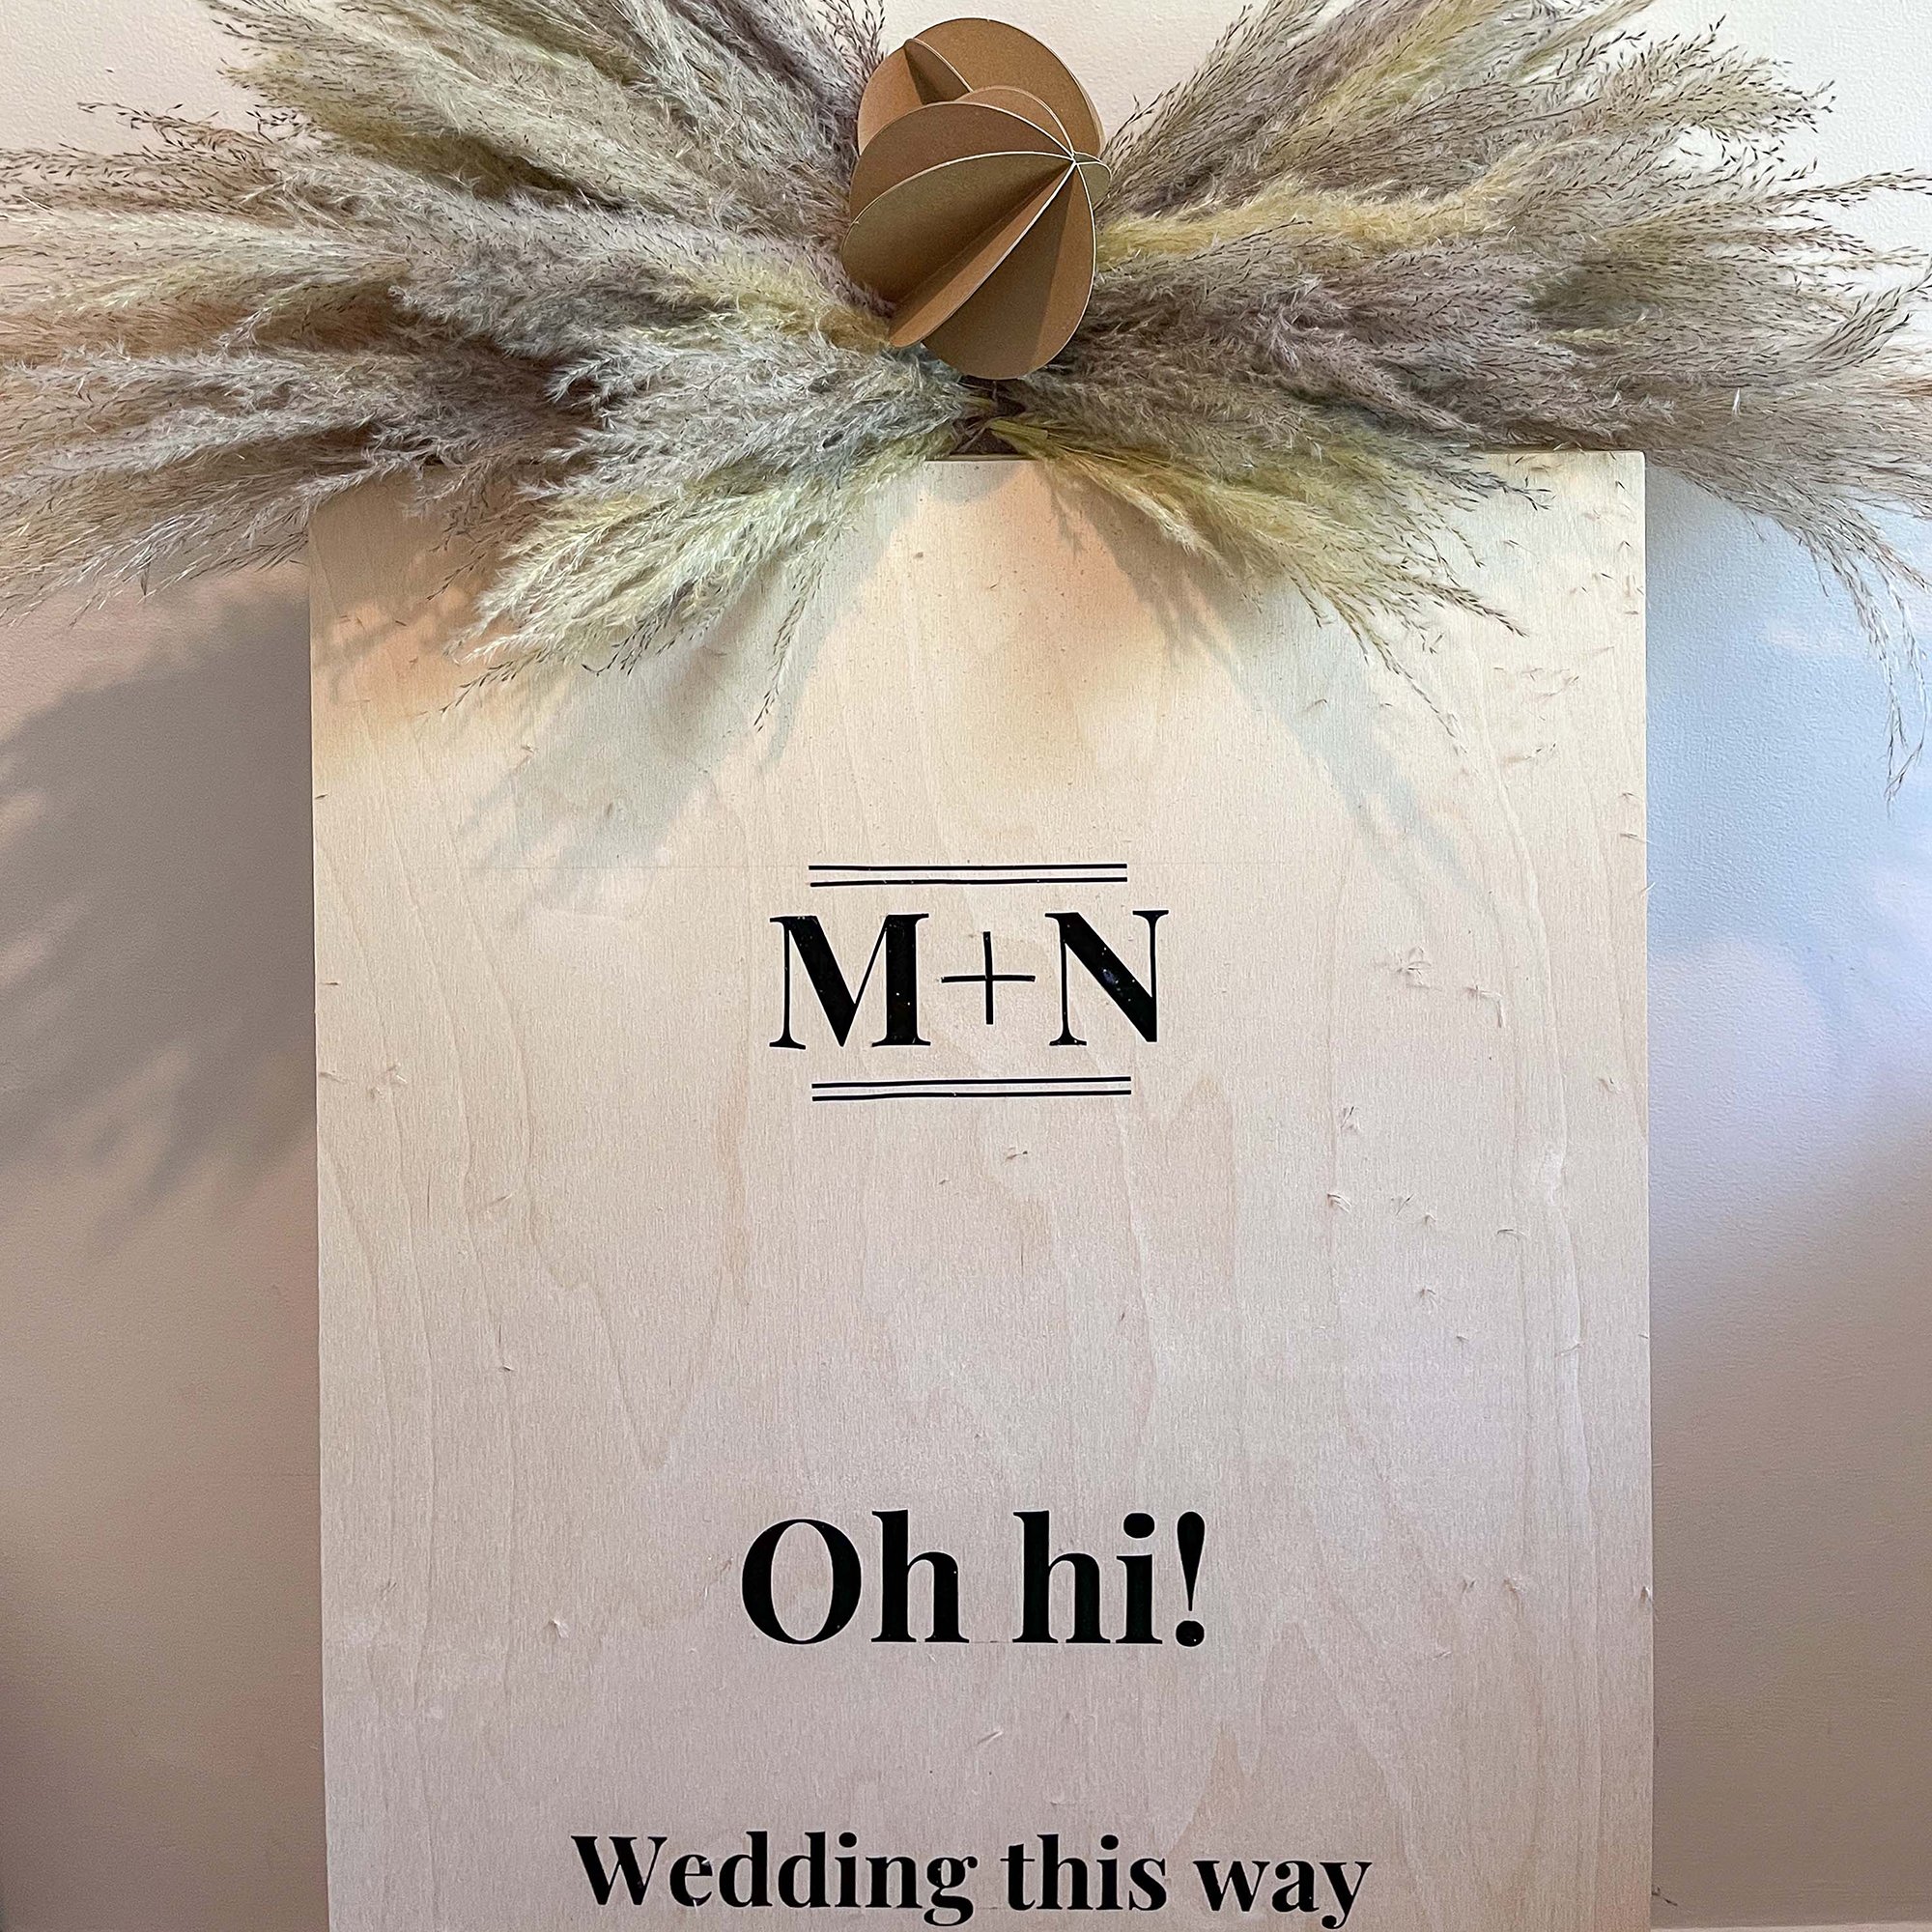 Cricut: How to Make a Wedding Easel Welcome Sign | Hobbycraft UK